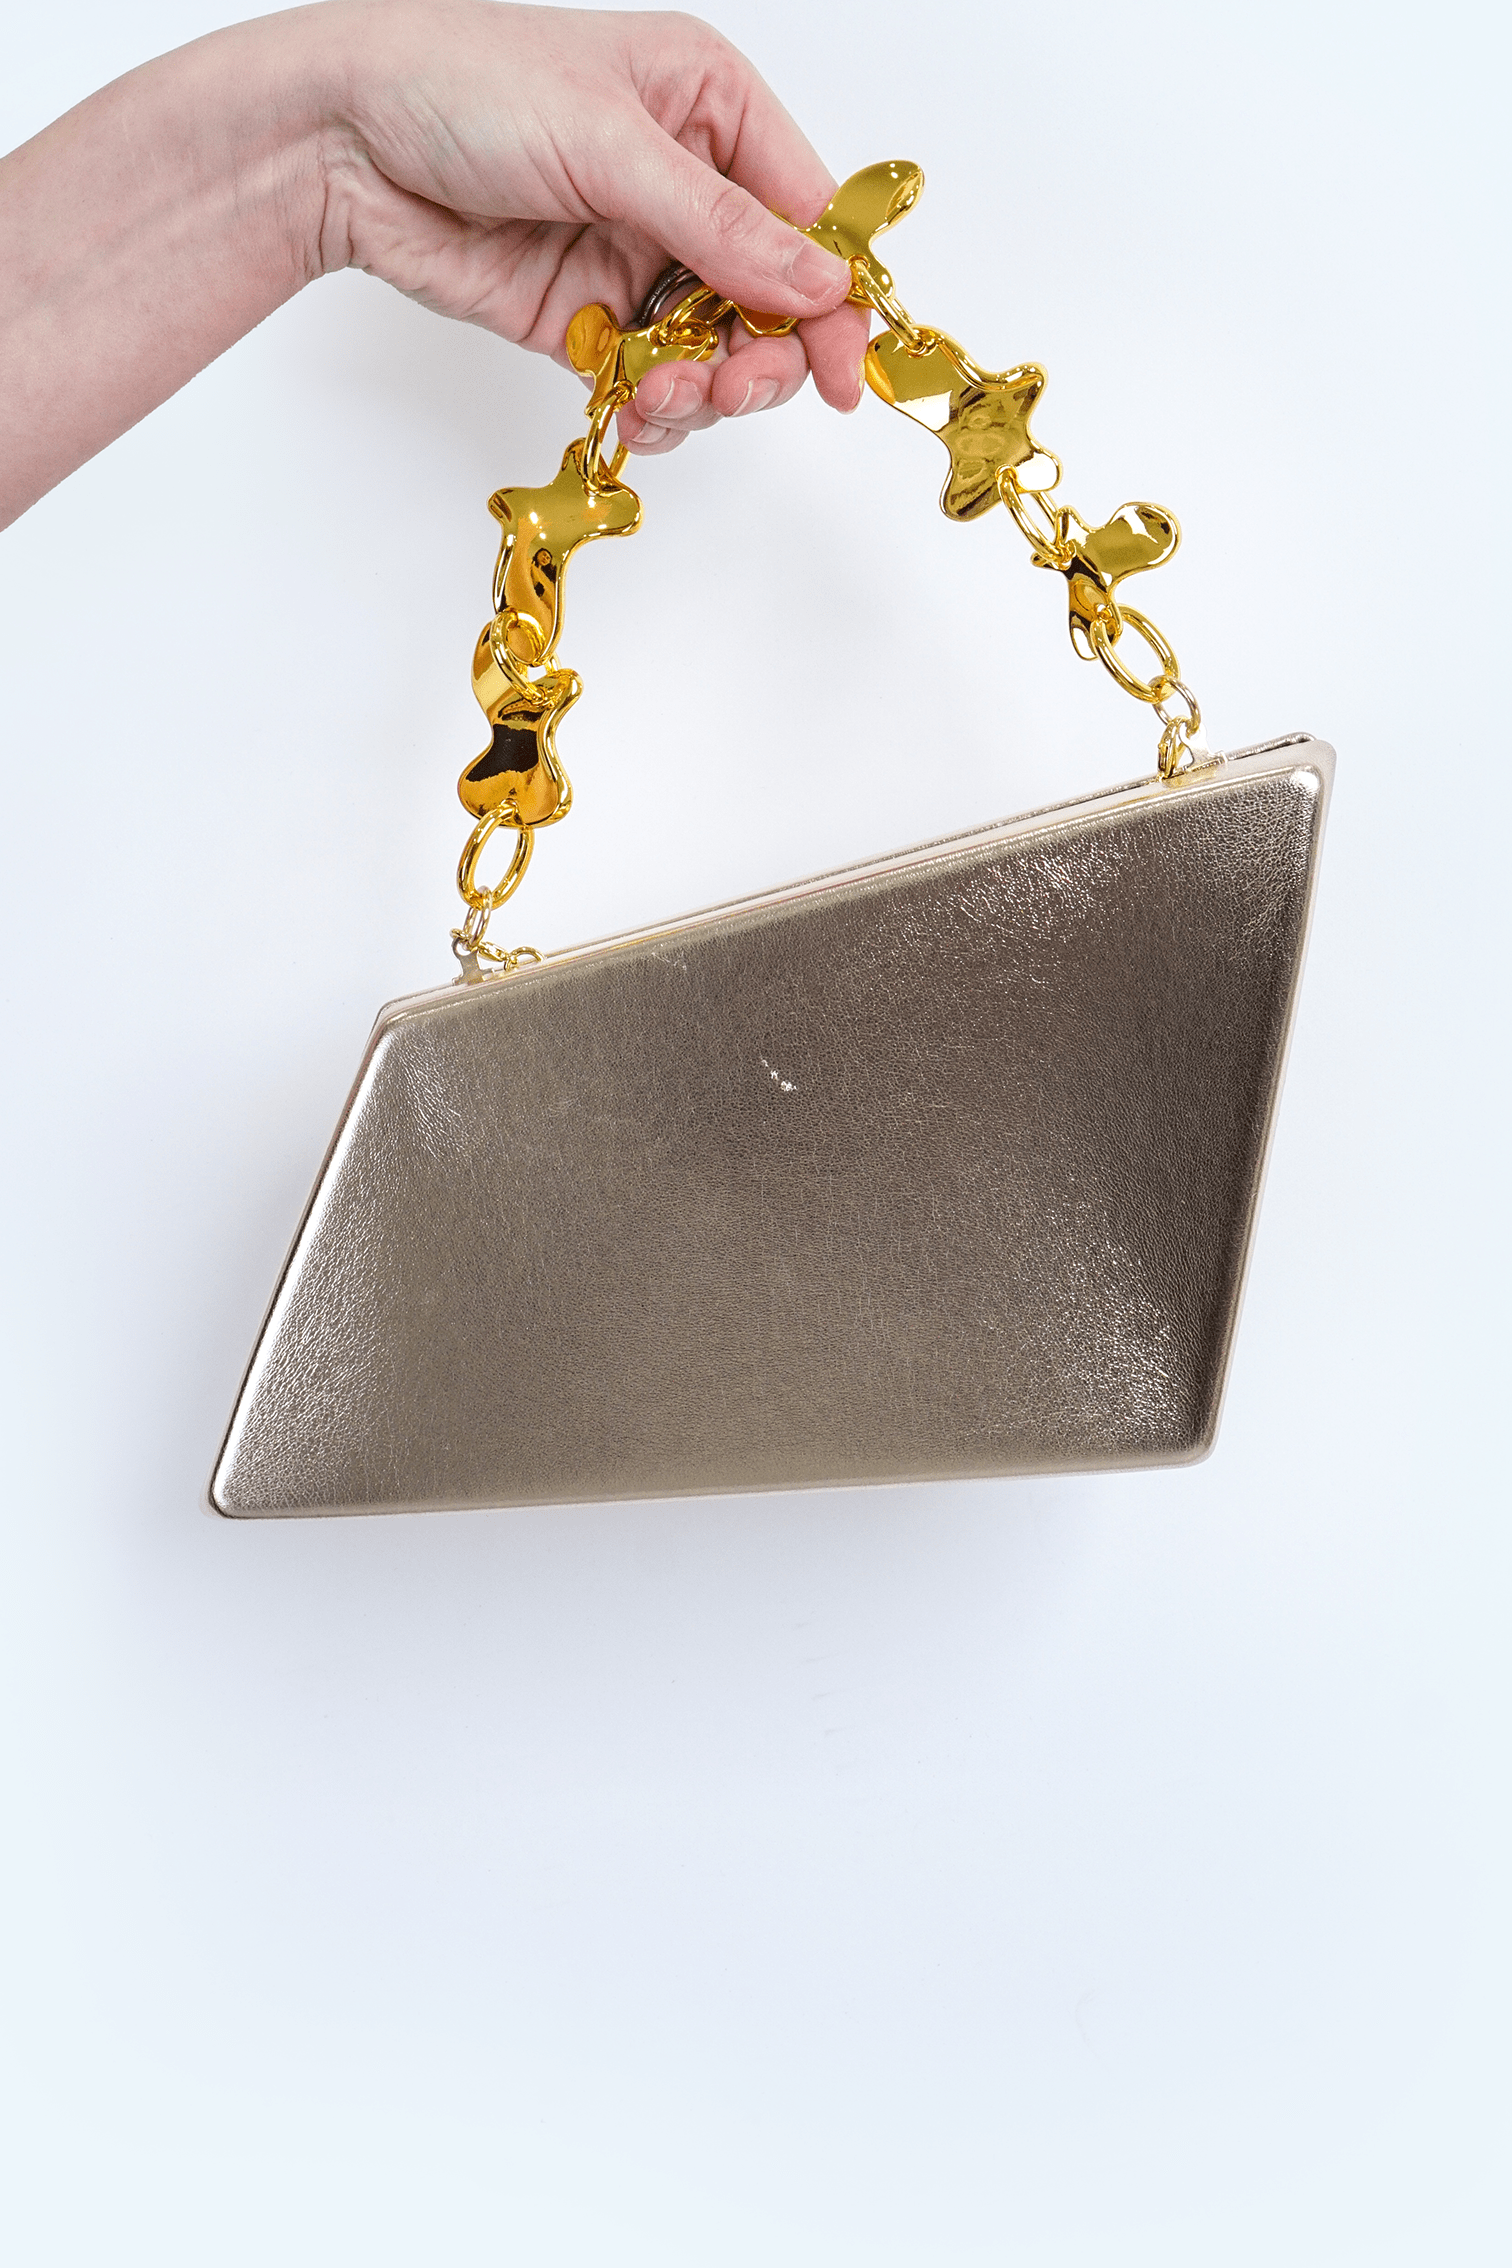 Chloe Dao HANDBAGS Gold Abstract Handle Bag